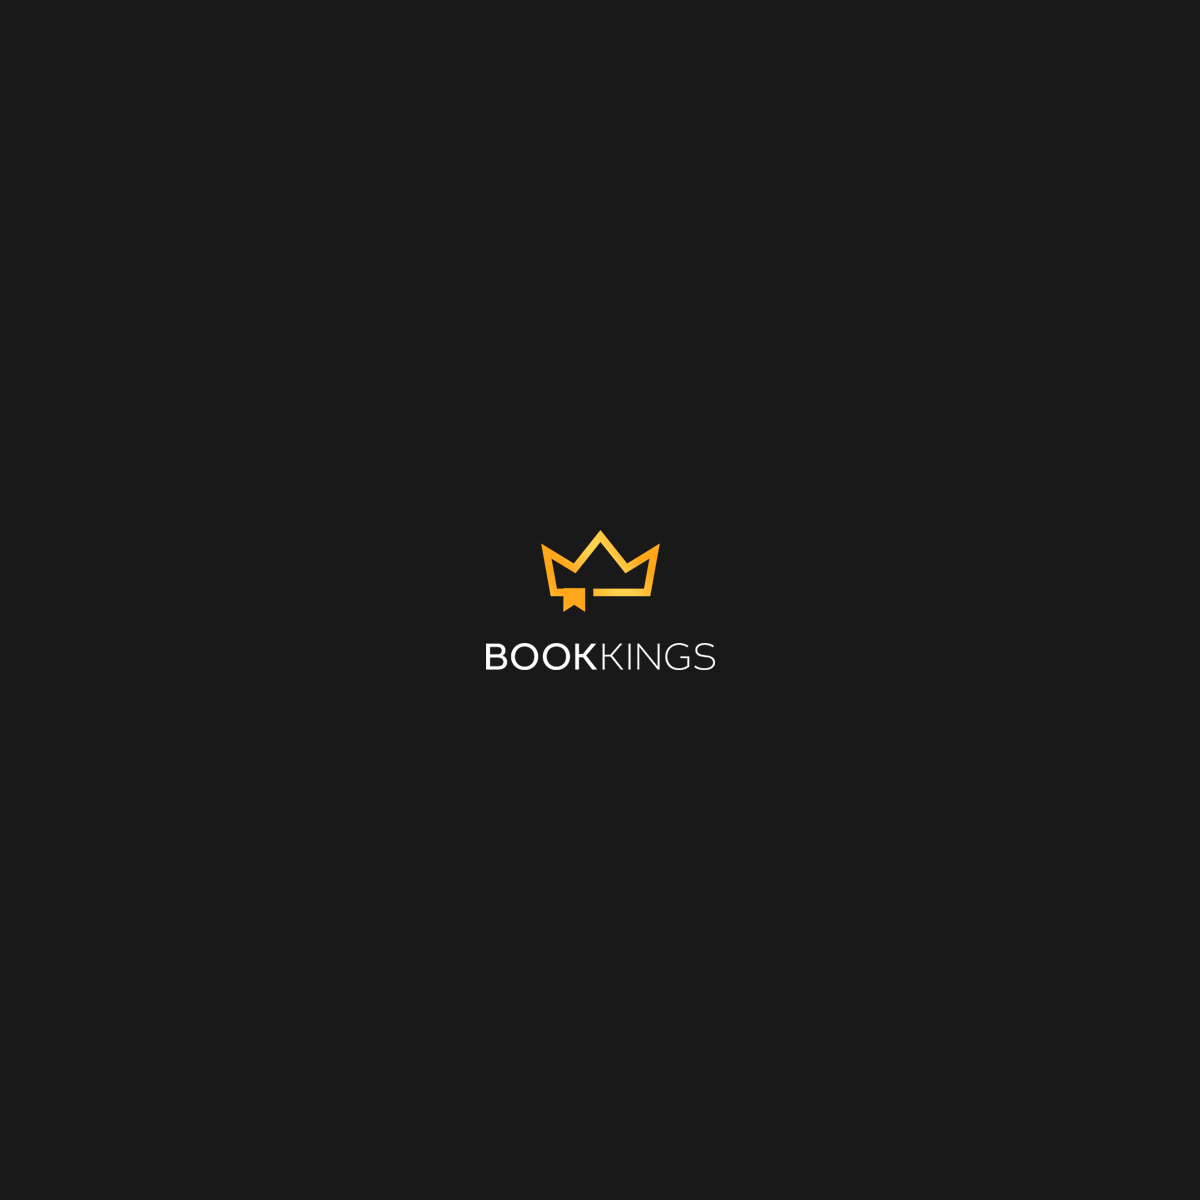 logo king crown book minimalist iconic